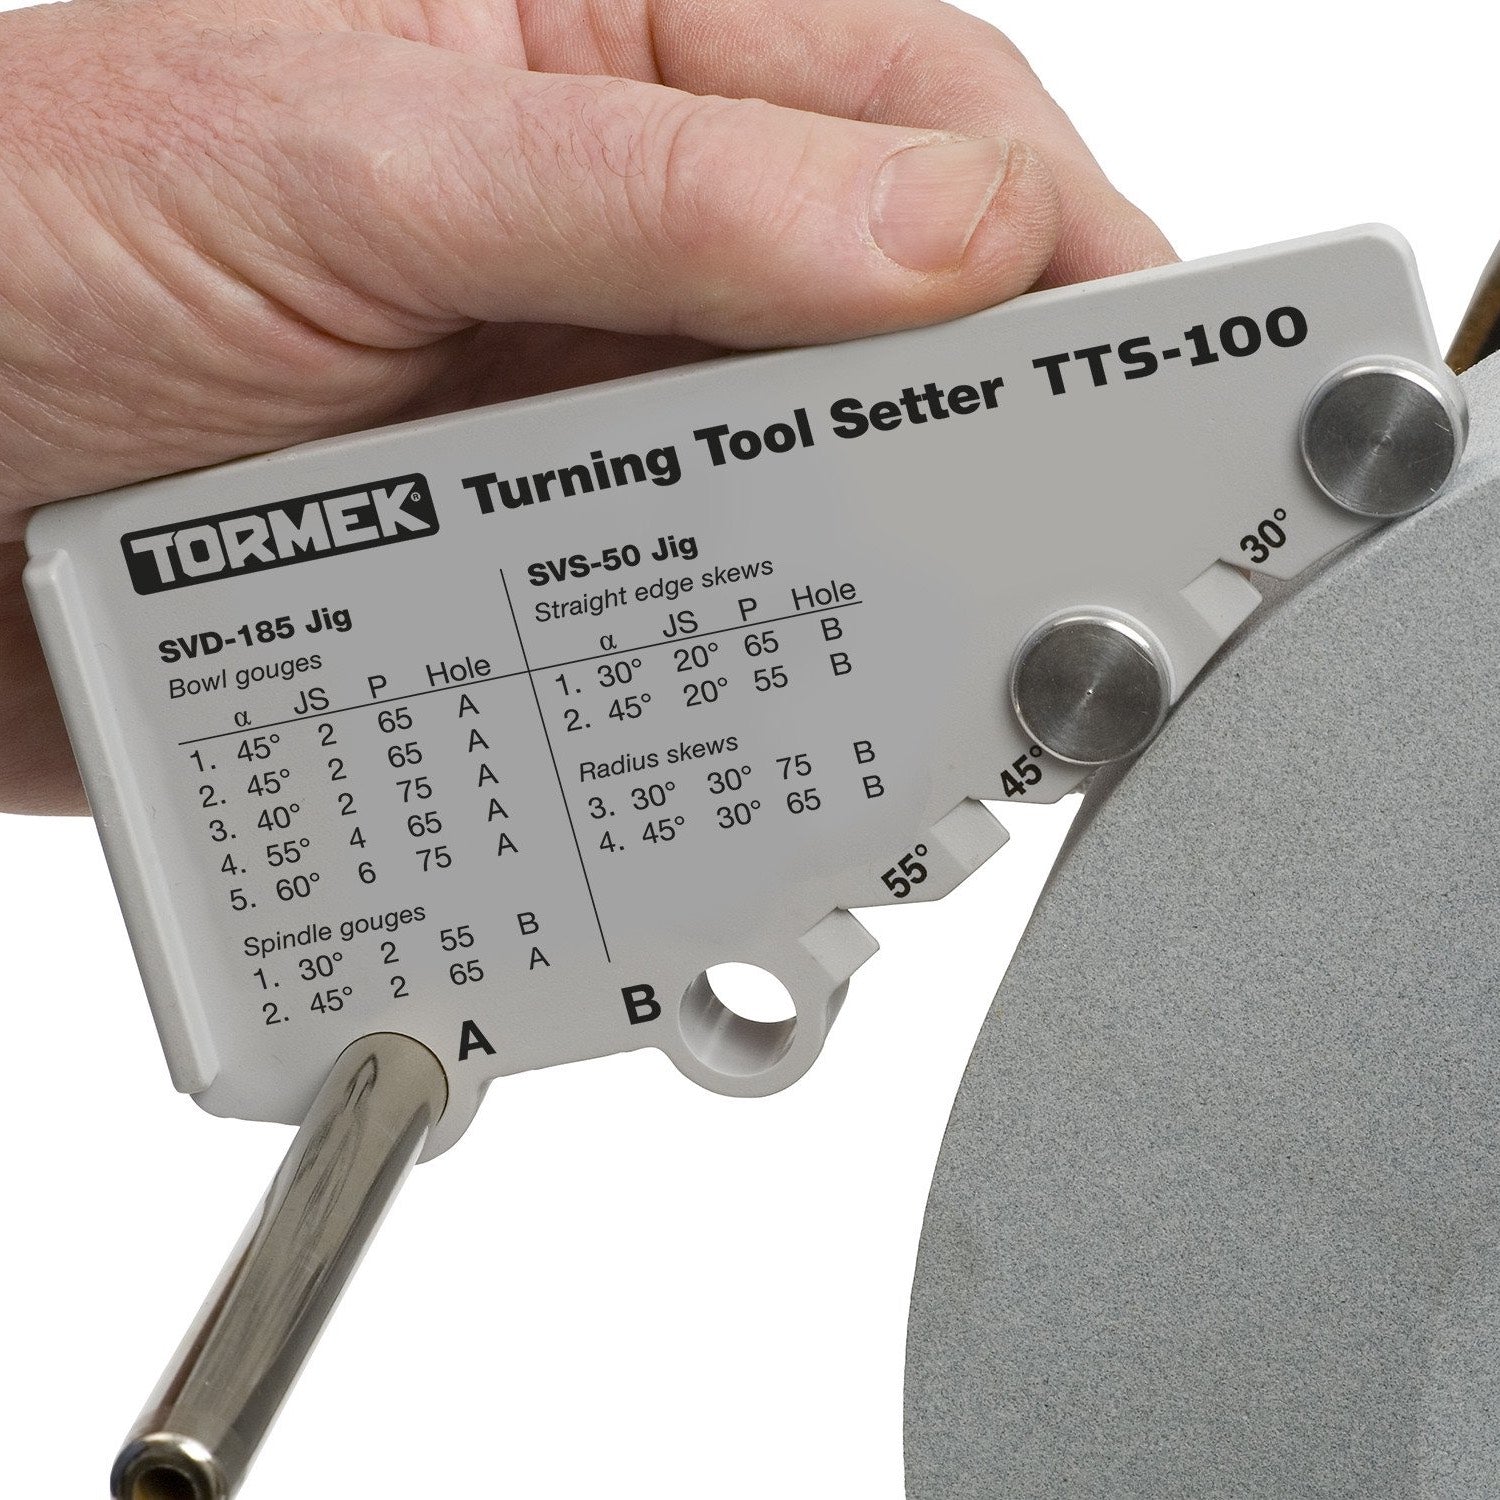 Tormek TTS-100 Turning Tool Setter Jig installed on steel jig guide bar against grinding wheel to set angle.